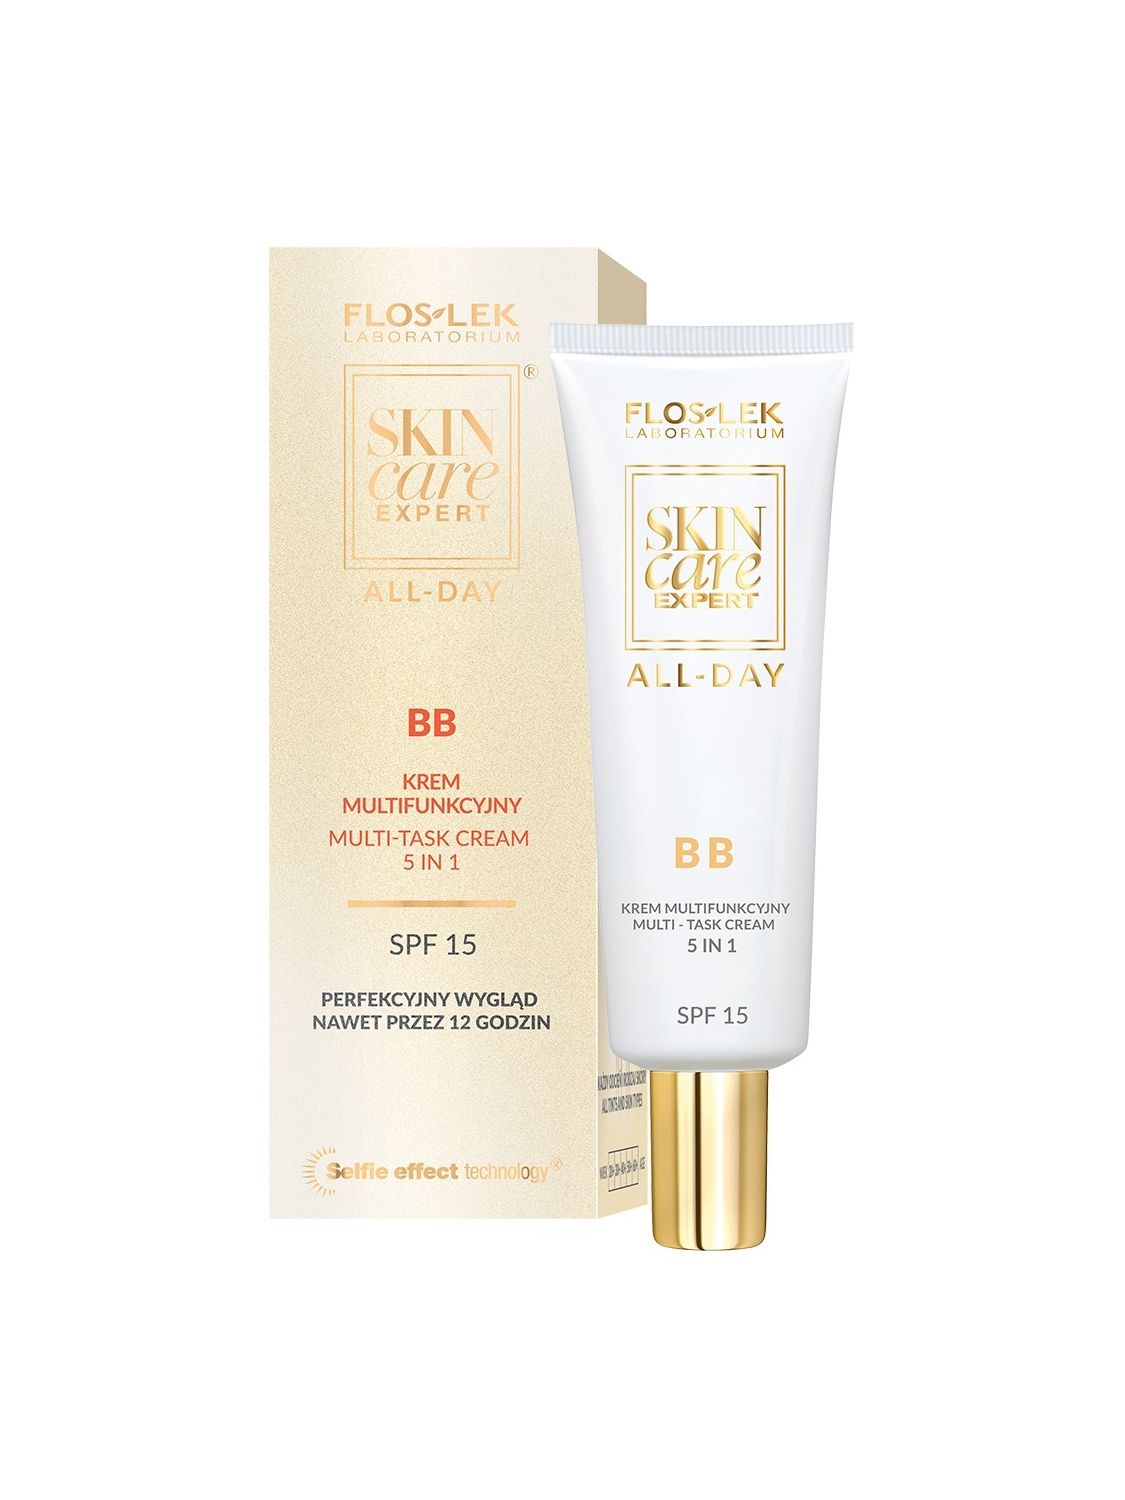 SKIN CARE EXPERT® ALL-DAY BB Multi-task cream 5 in 1 - 50 ml - Floslek